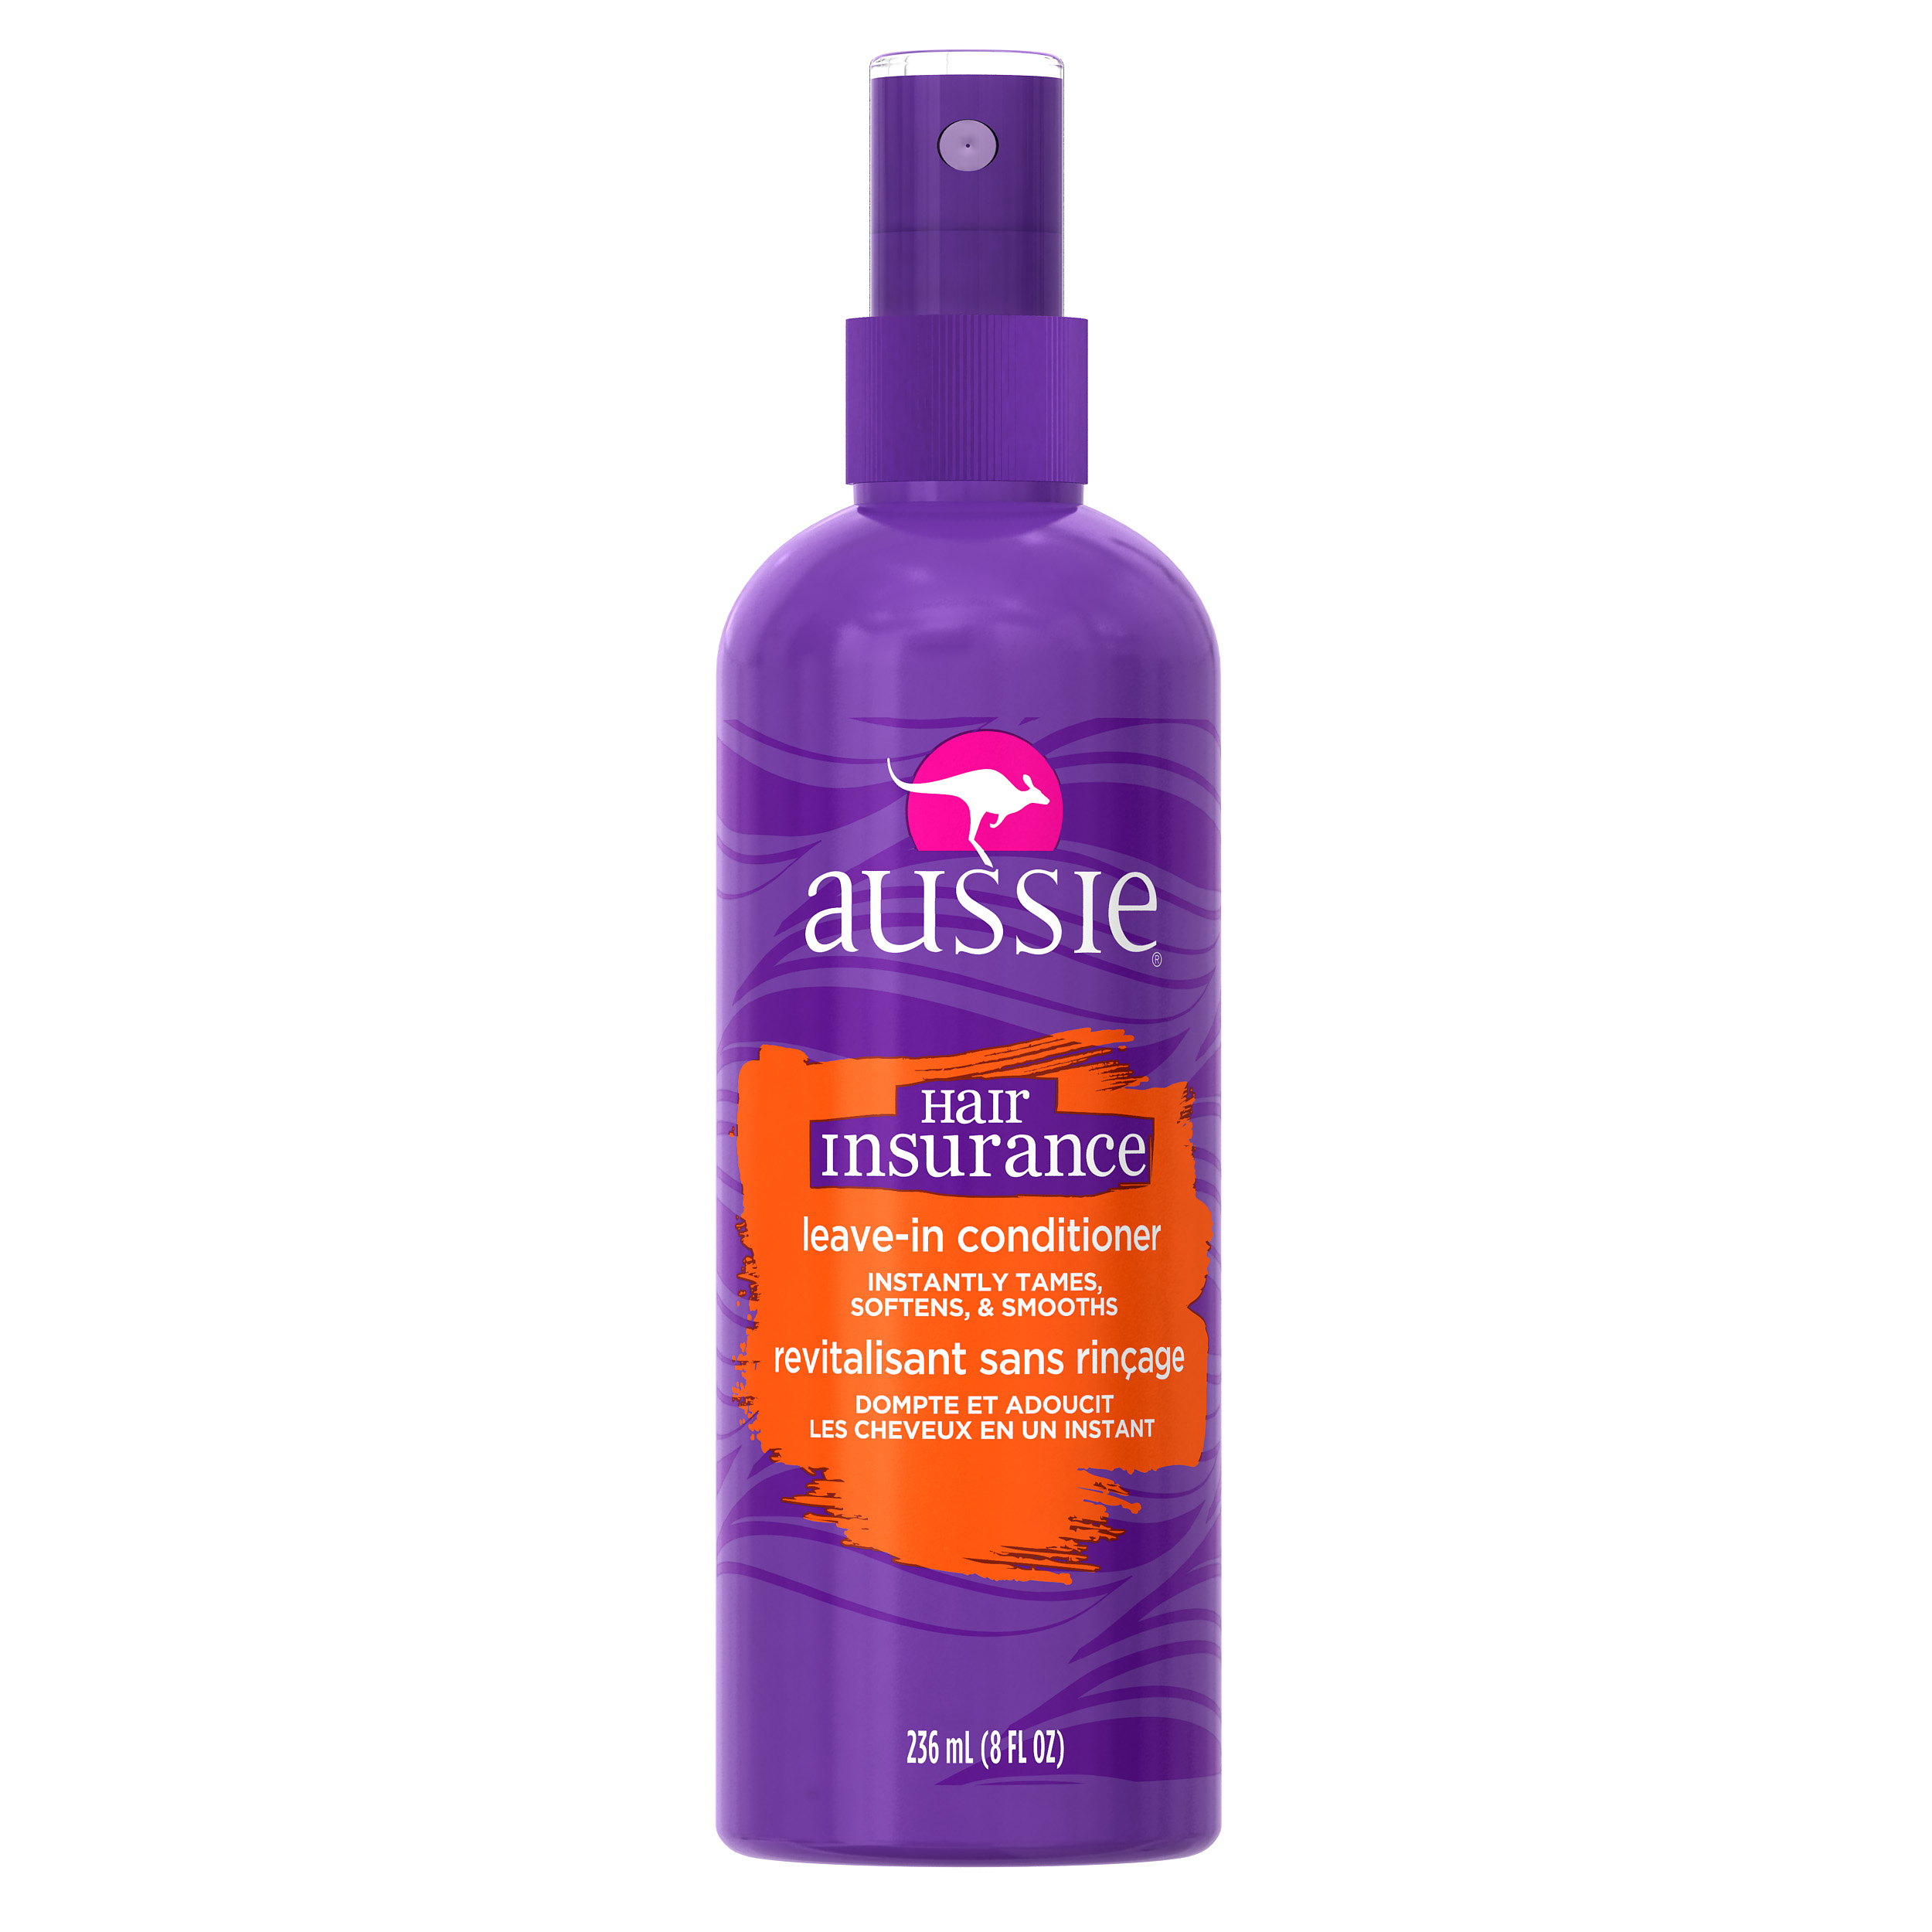 Aussie Hair Insurance Leave-In Conditioner Spray, 8 fl oz - image 1 of 9